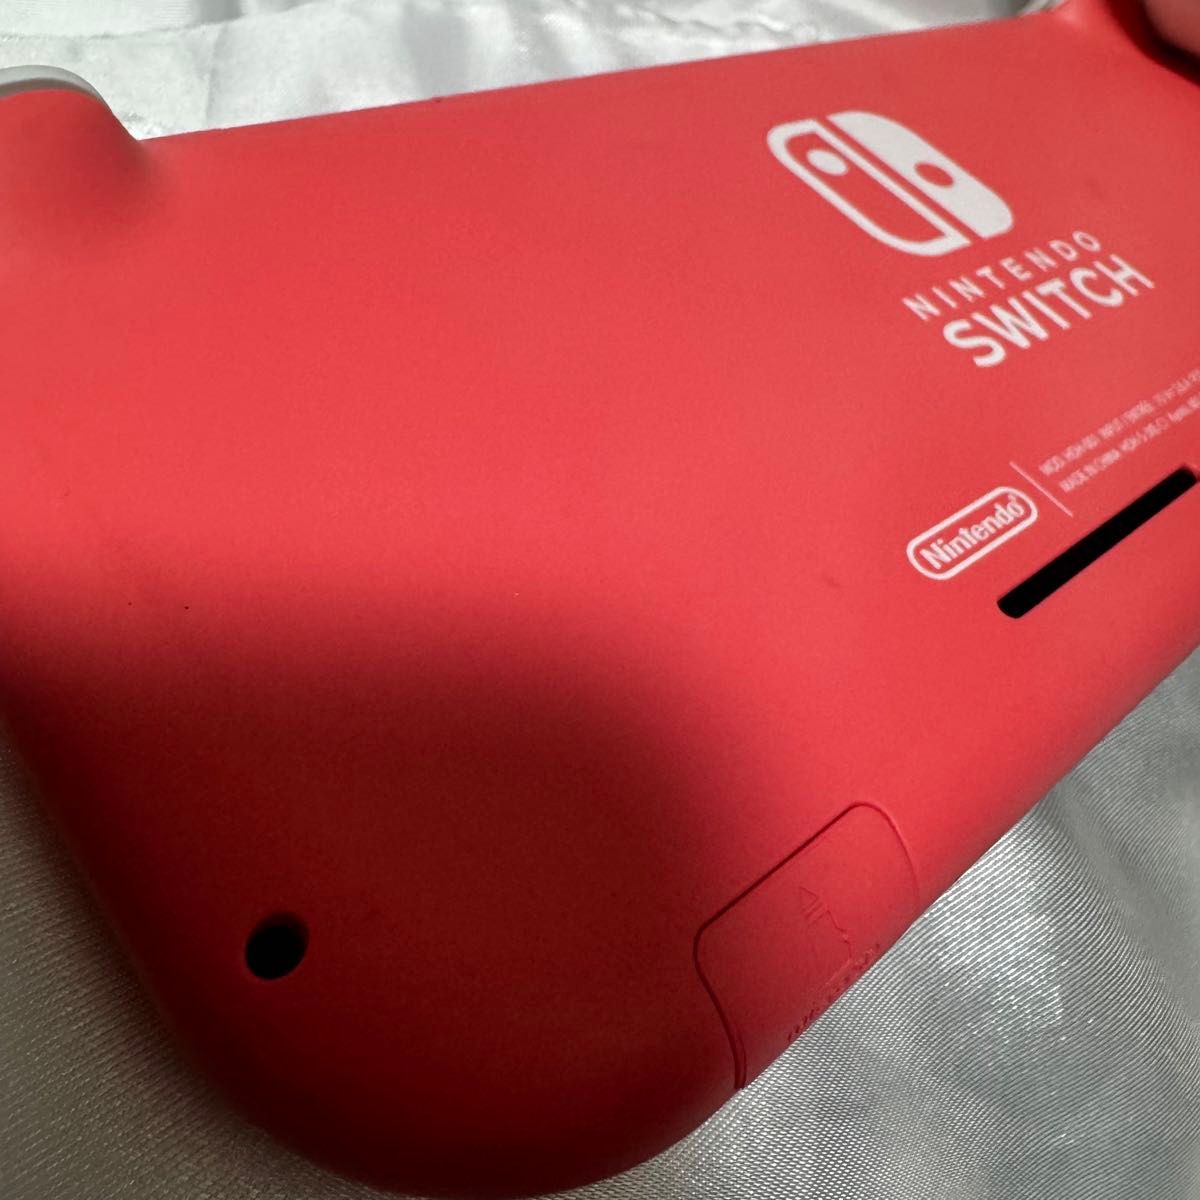 Nintendo Switch Light コーラルピンク 本体、充電器セット